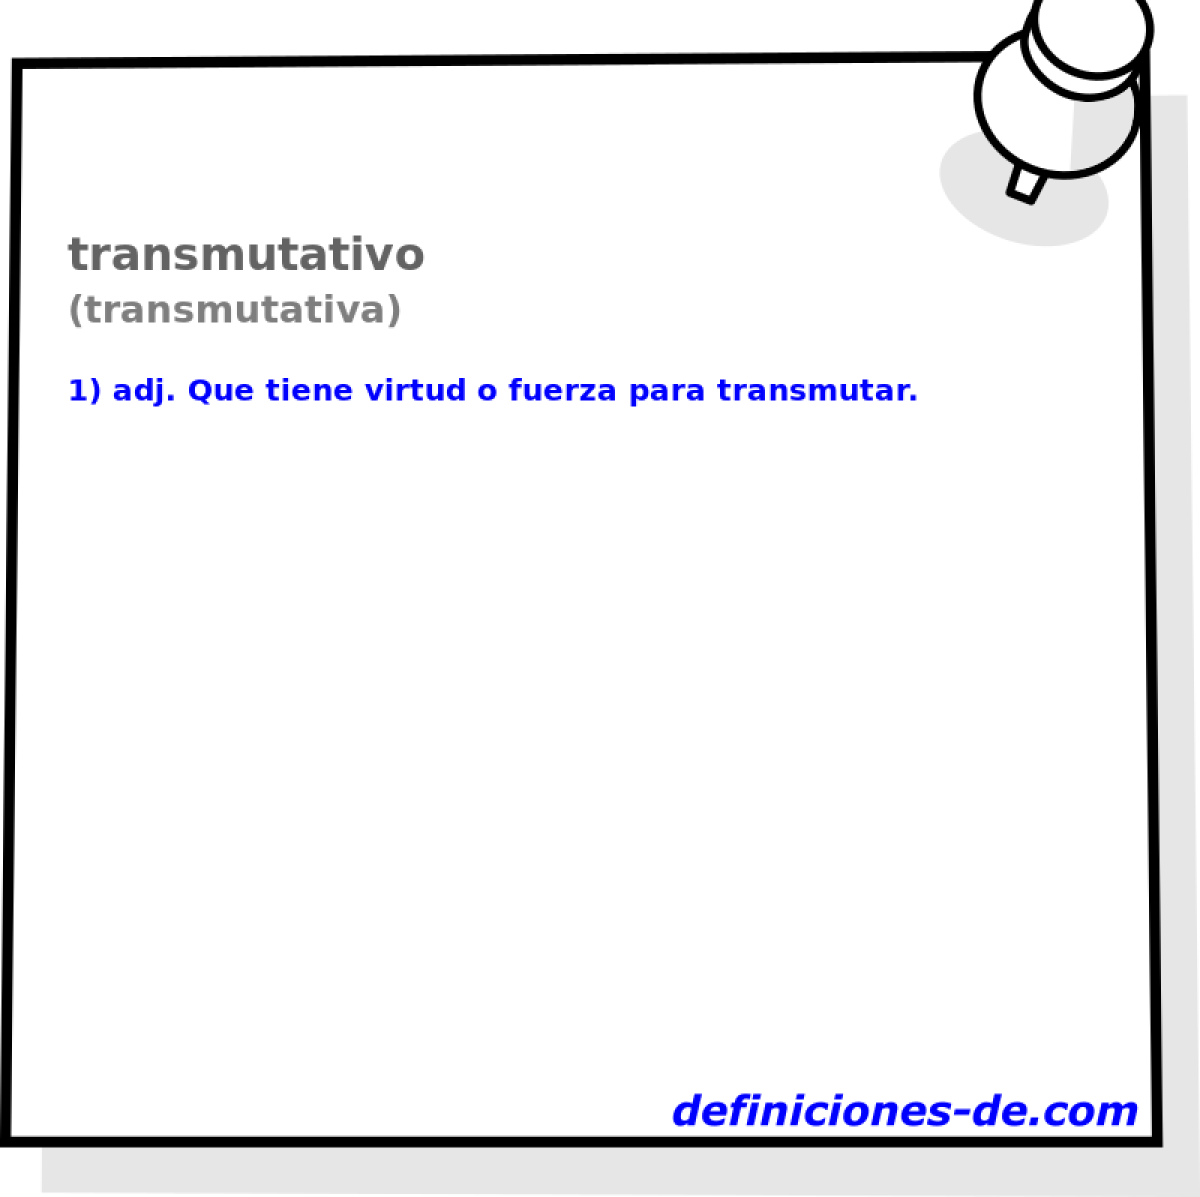 transmutativo (transmutativa)